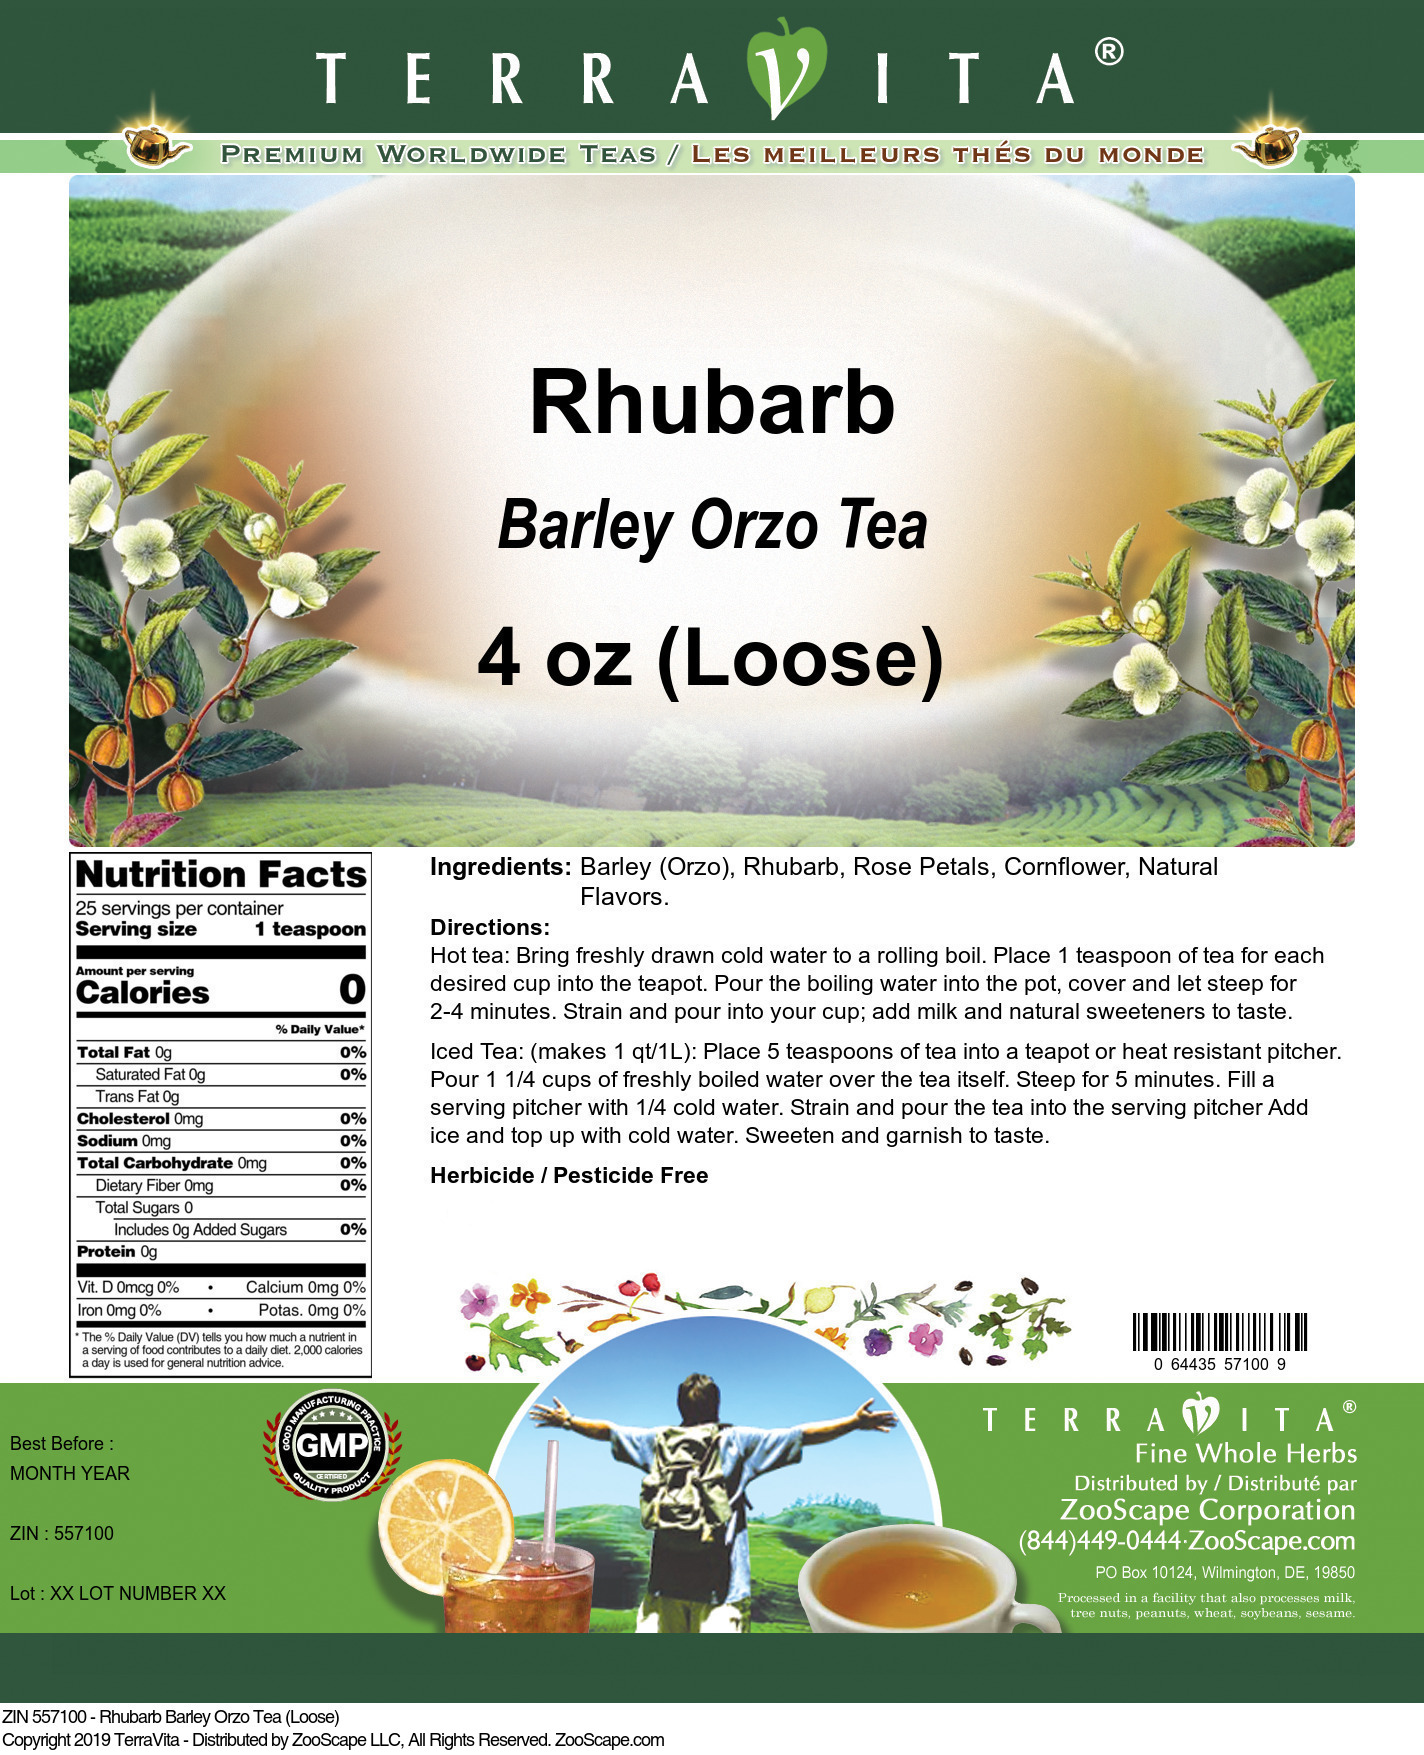 Rhubarb Barley Orzo Tea (Loose) - Label